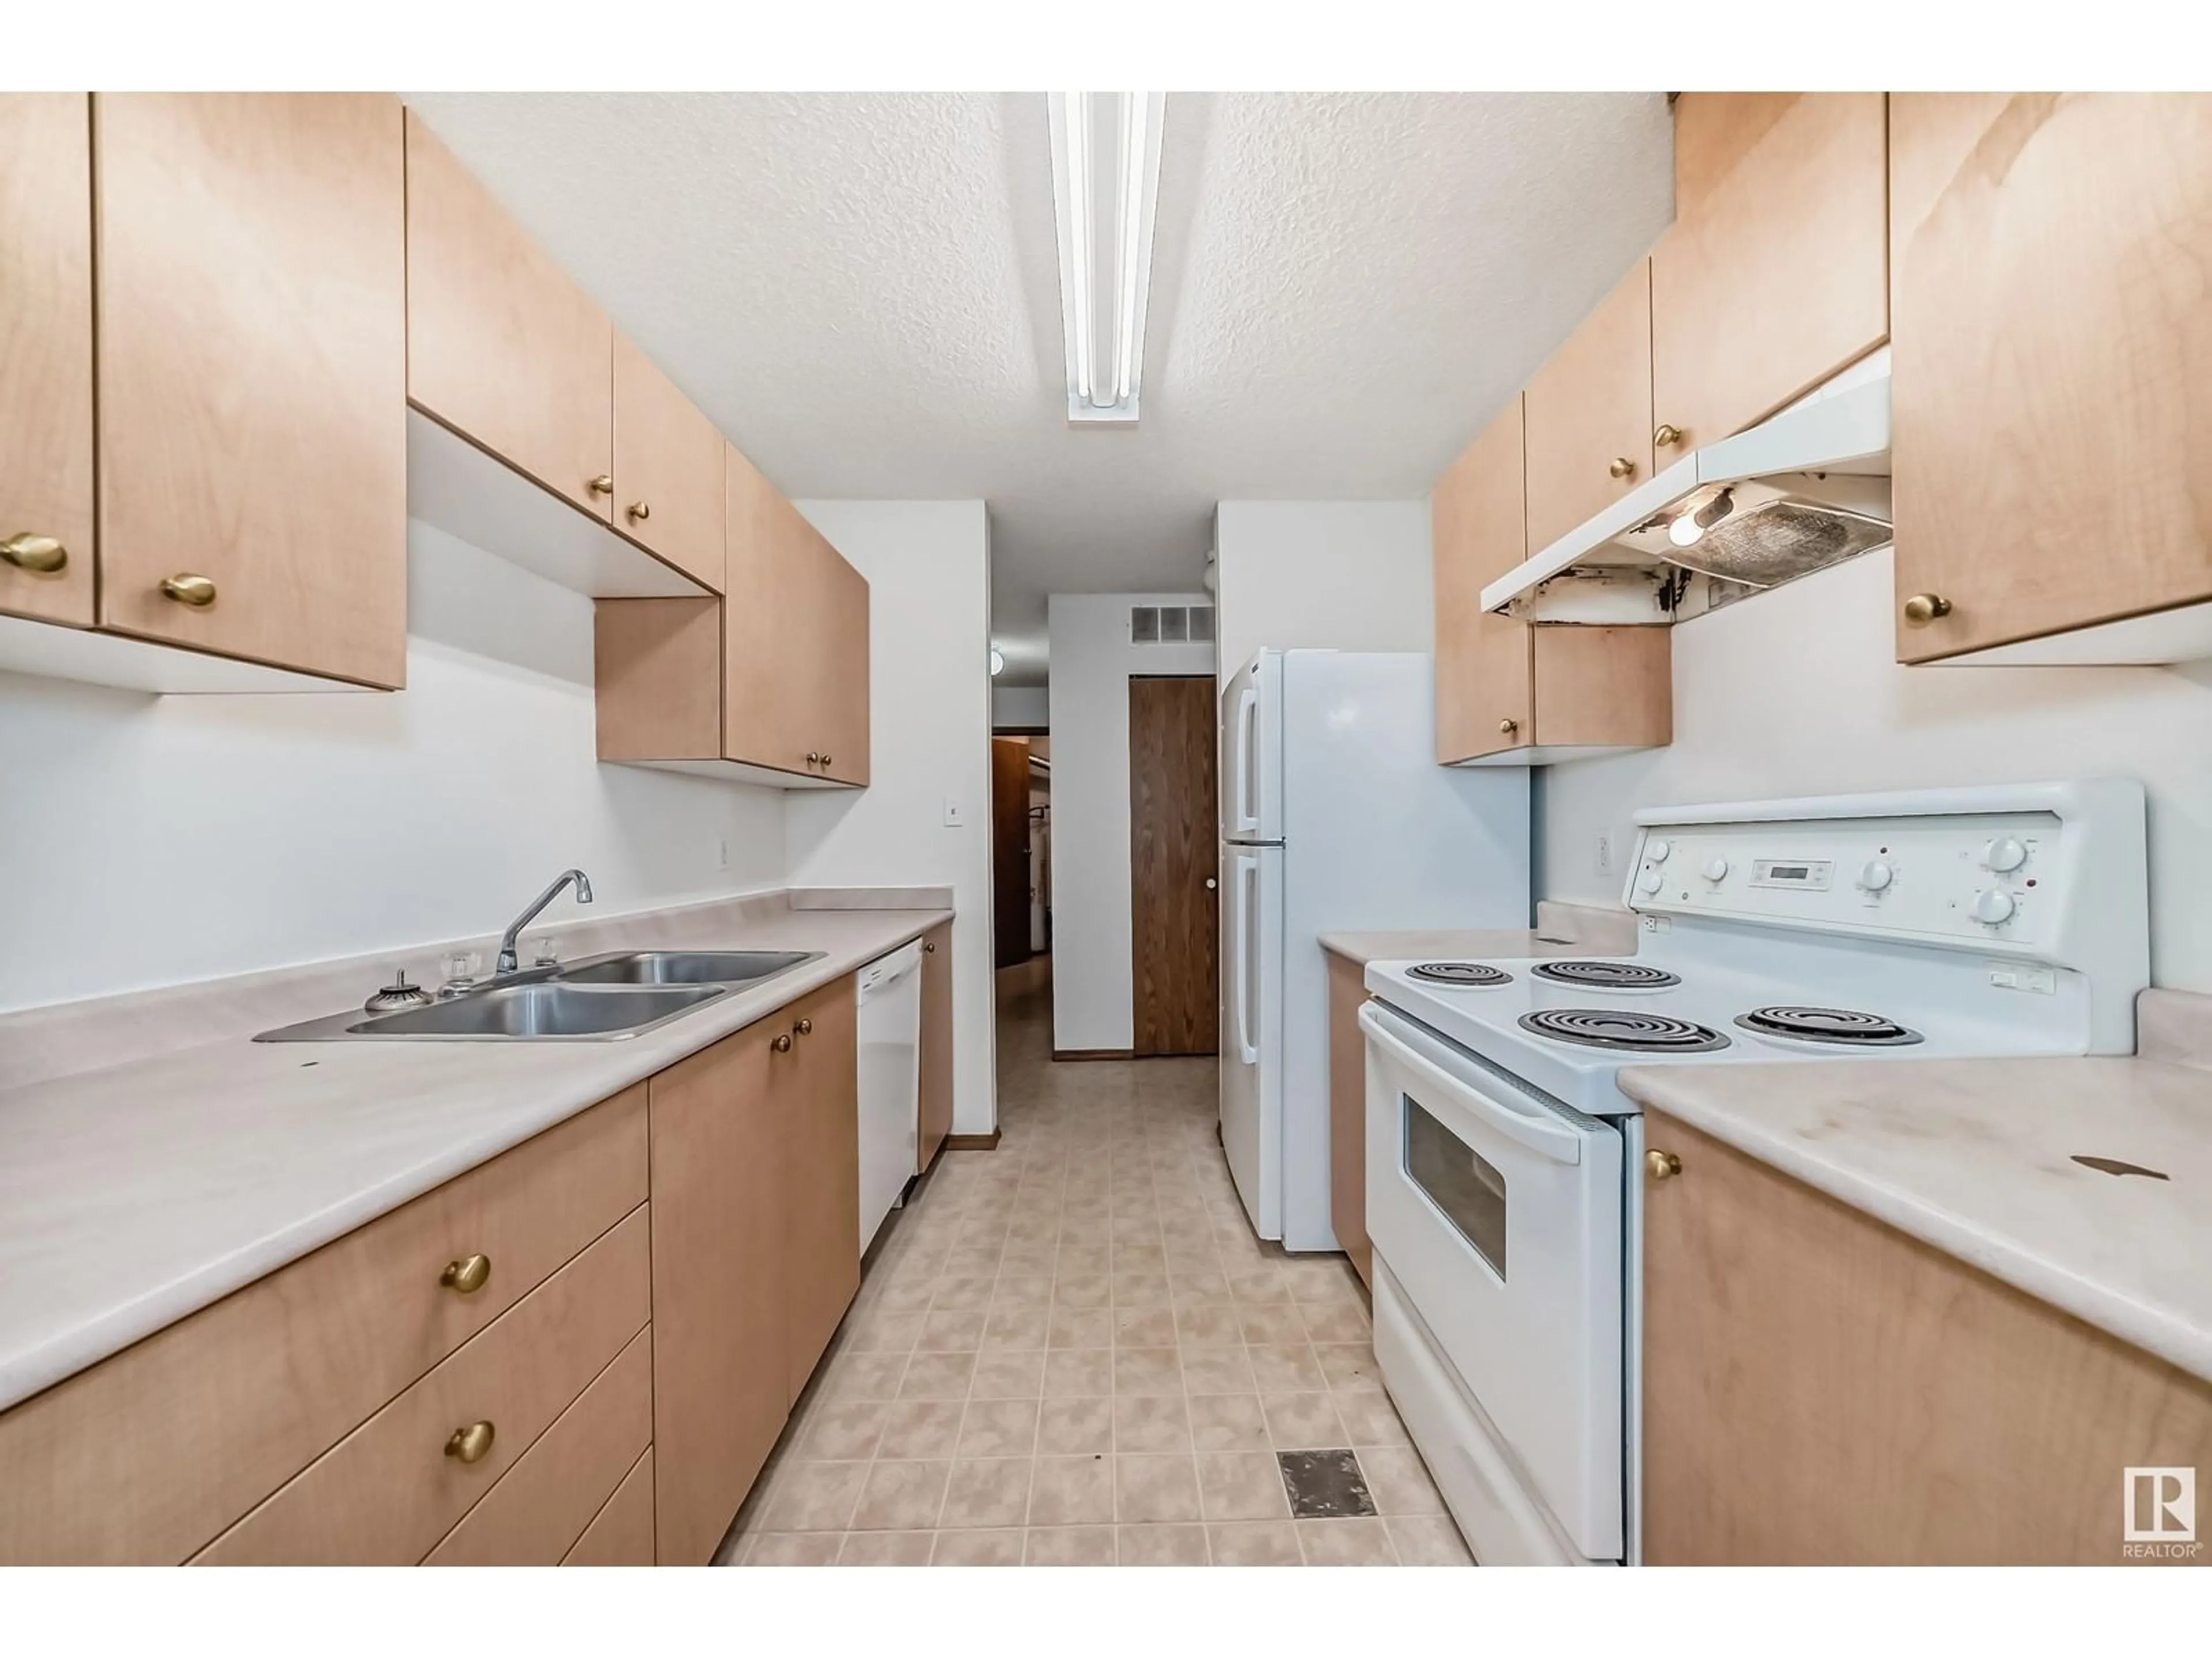 Standard kitchen for #203 620 KING ST, Spruce Grove Alberta T7X4K1